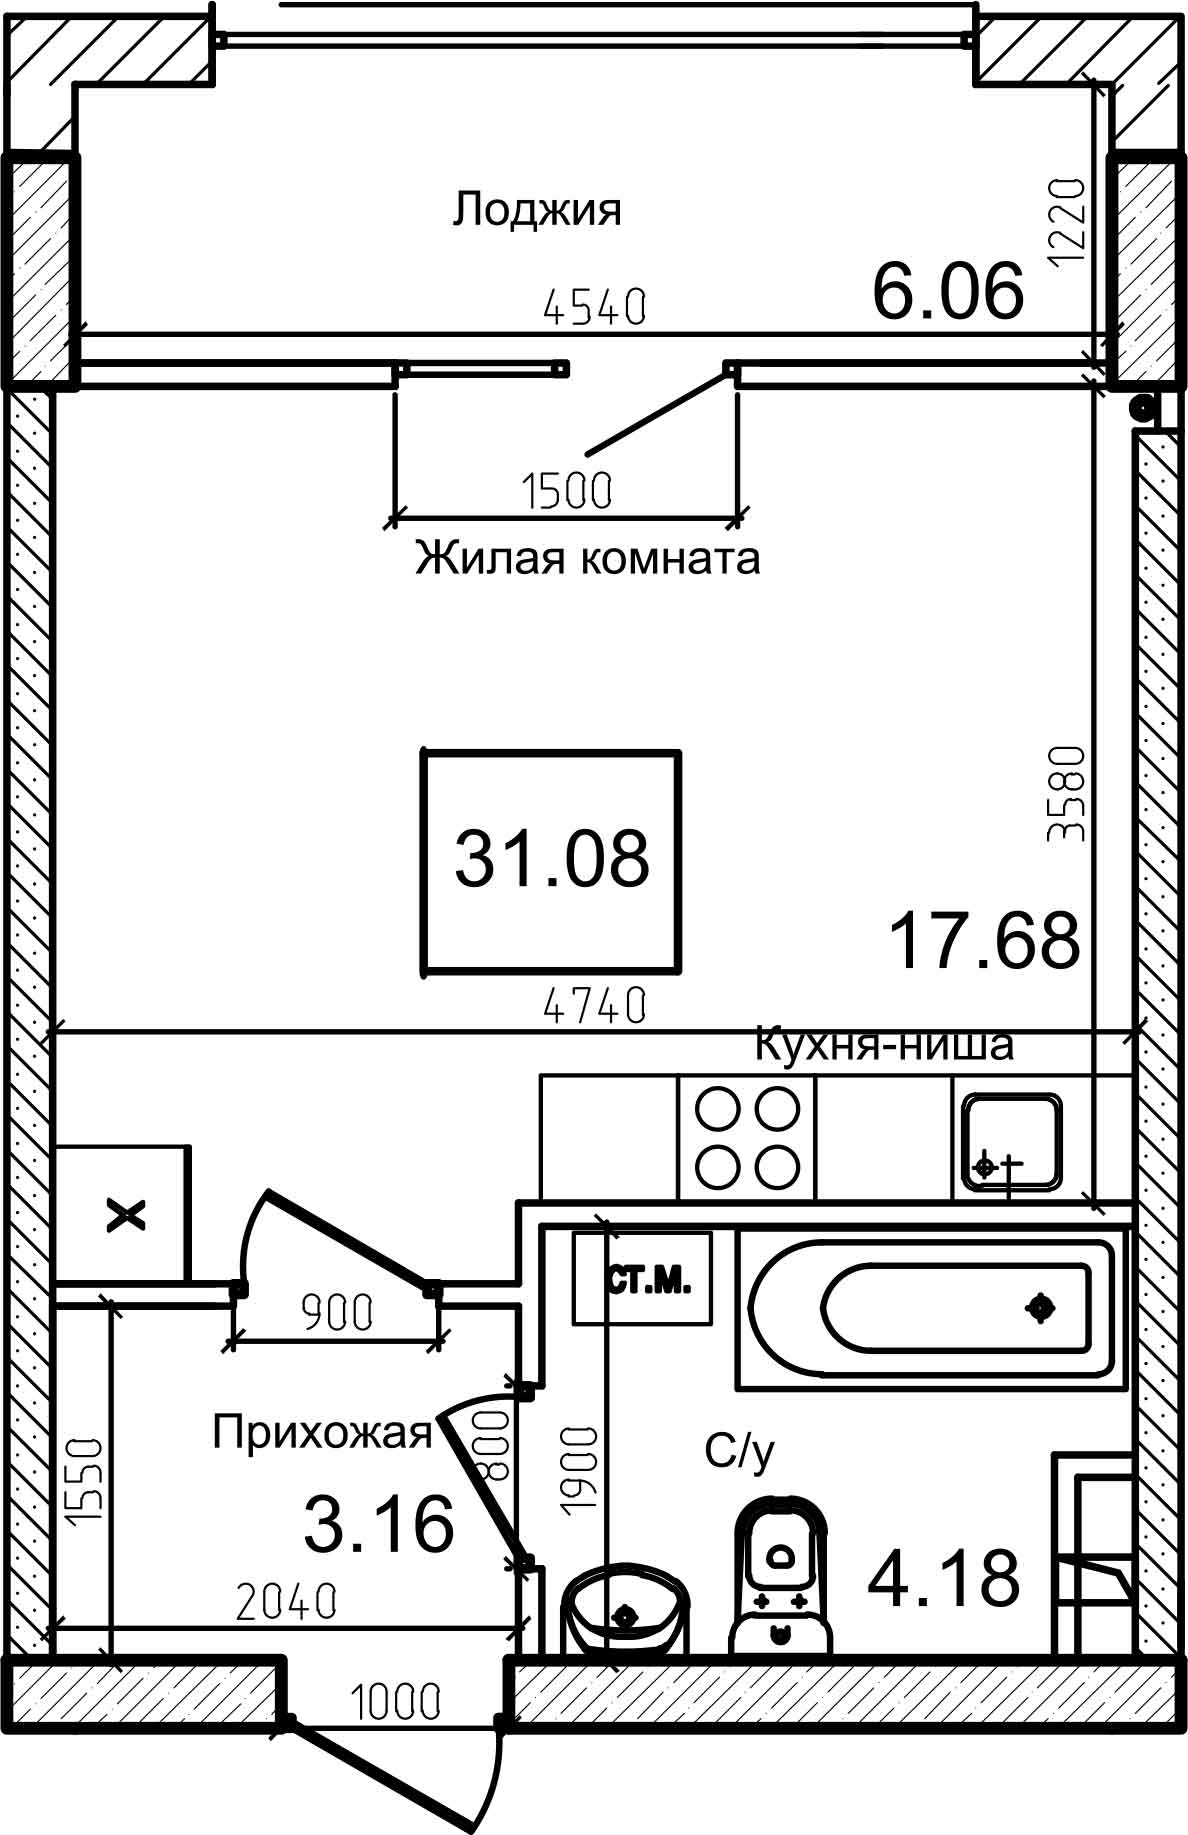 Planning Smart flats area 31.1m2, AB-08-06/00008.